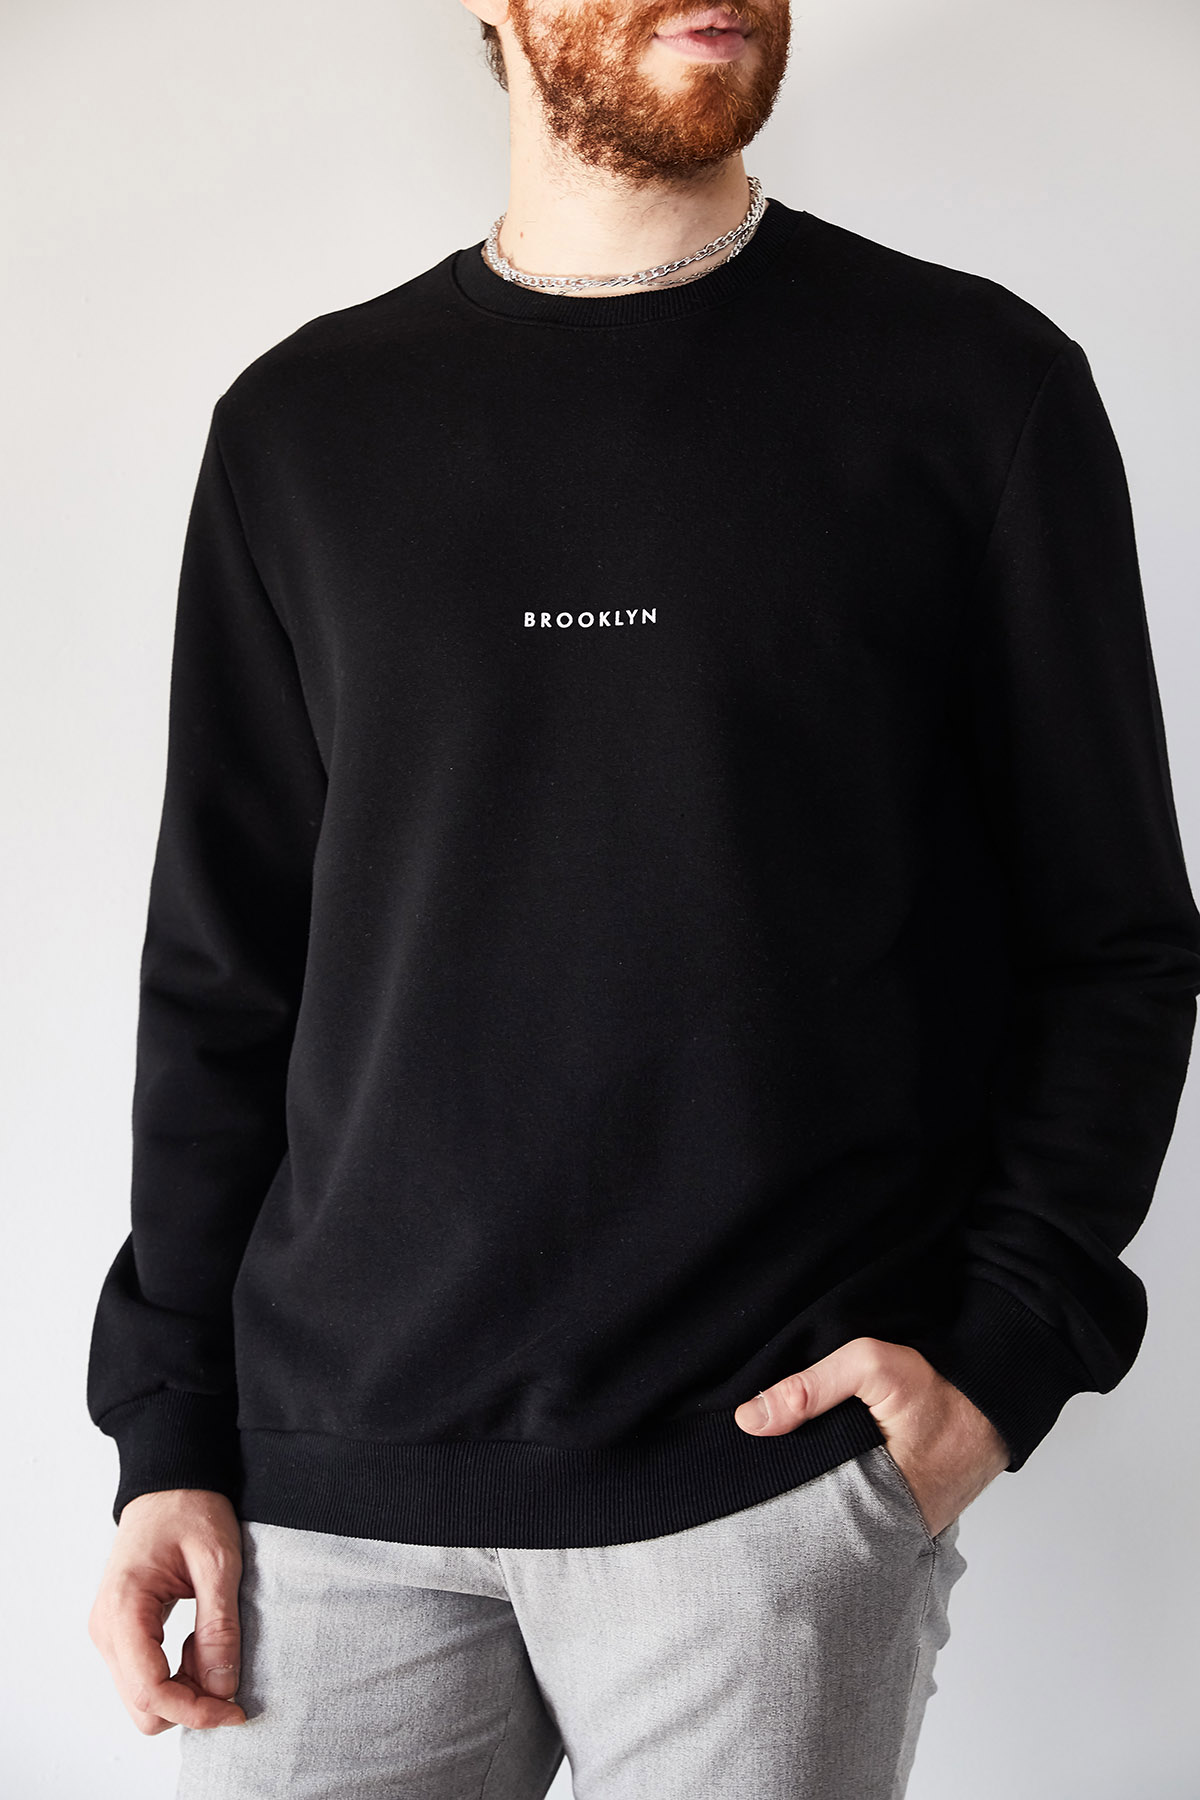 Siyah Brooklyn Baskılı Sweatshirt 1KXE8-44229-02 - 1